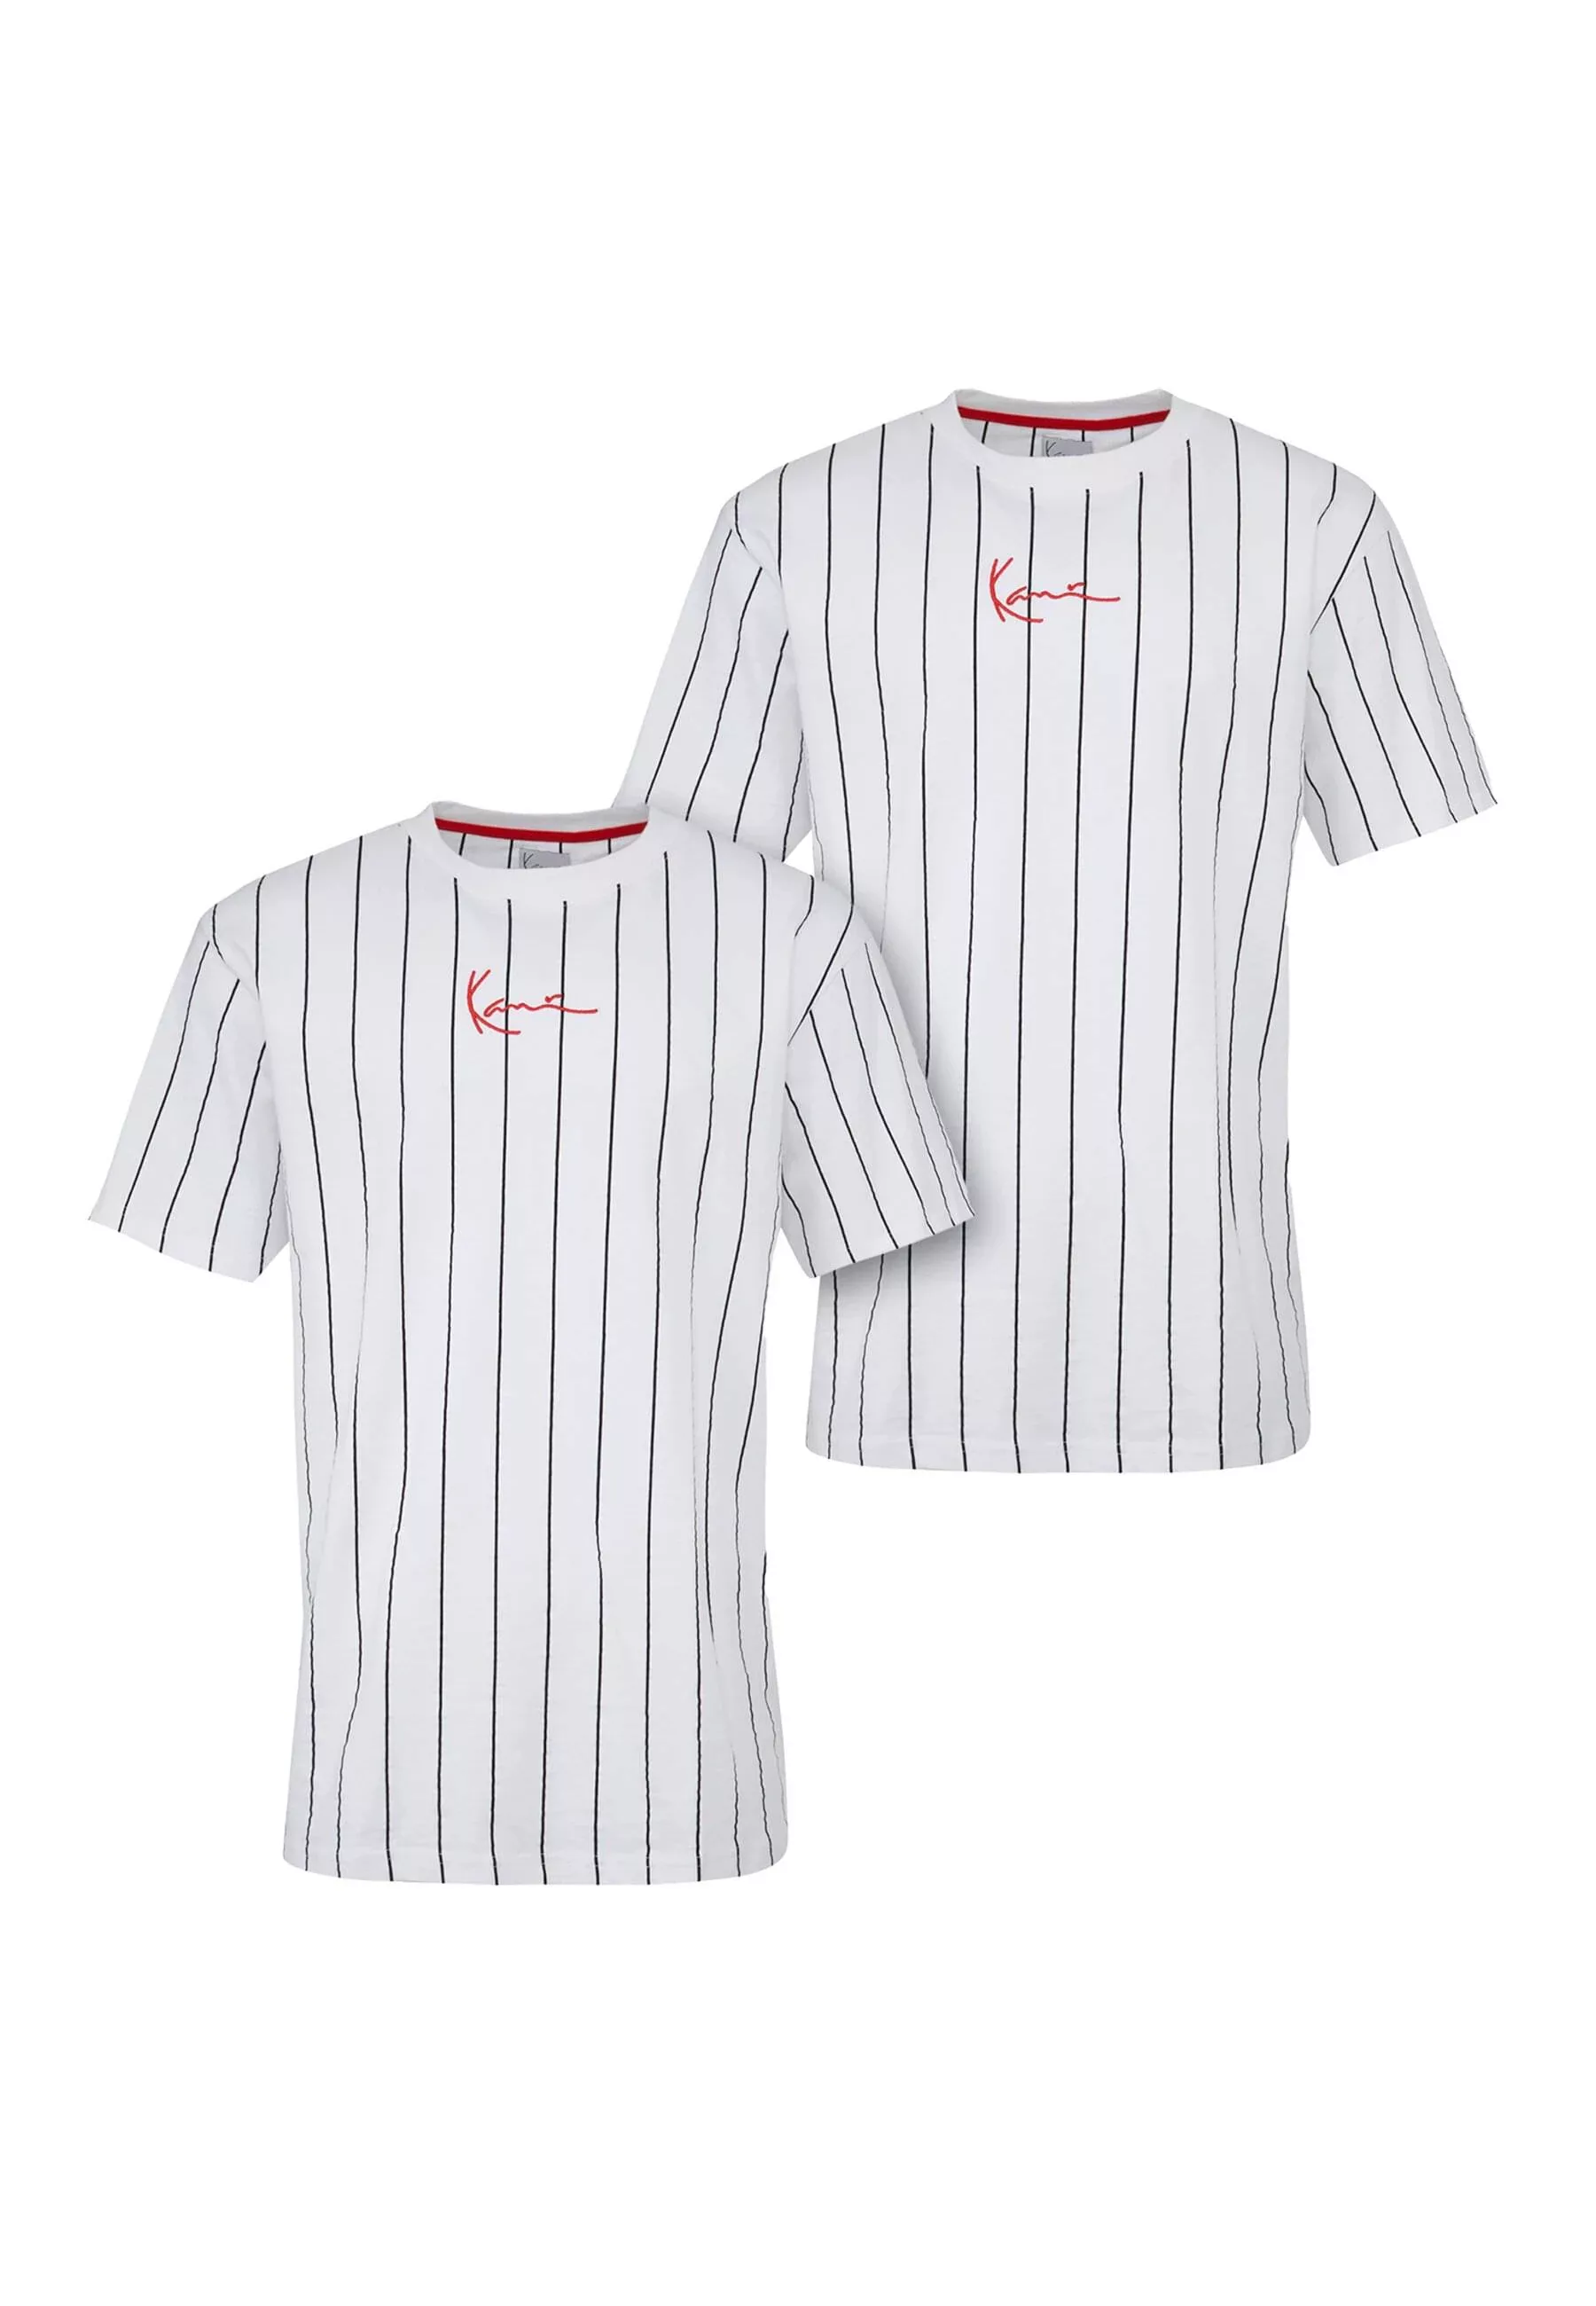 Karl Kani T-Shirt "Karl Kani Herren" günstig online kaufen